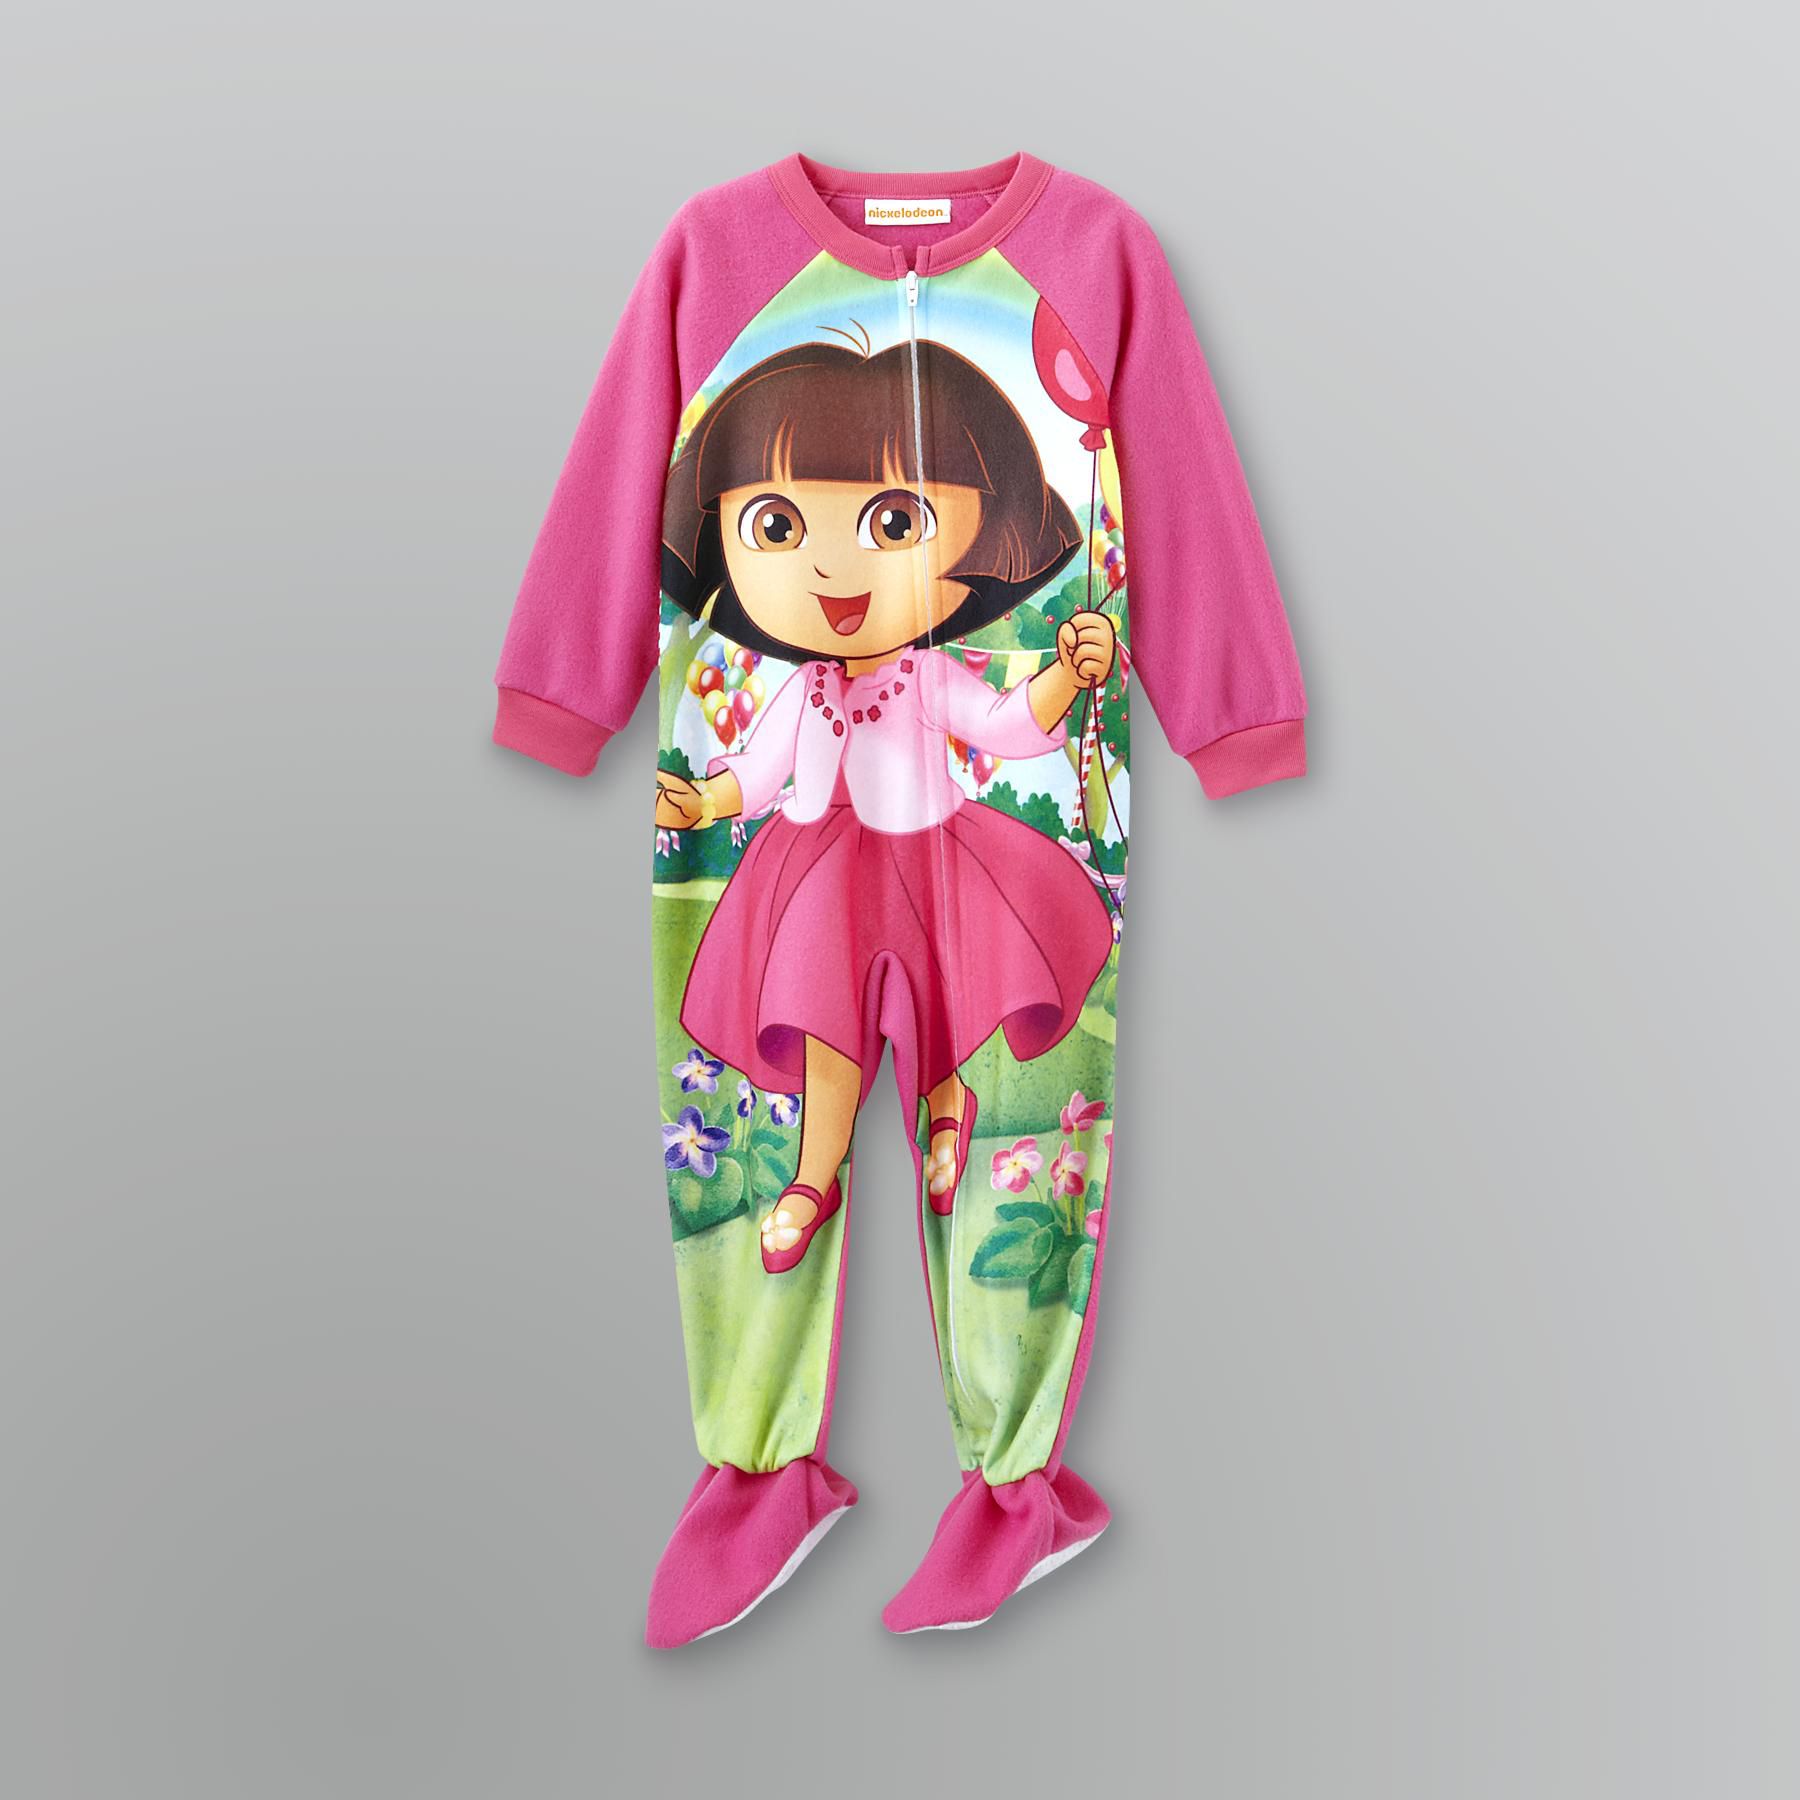 Dora The Explorer Infant and Toddler Girl's Fleece Sleeper Pajamas